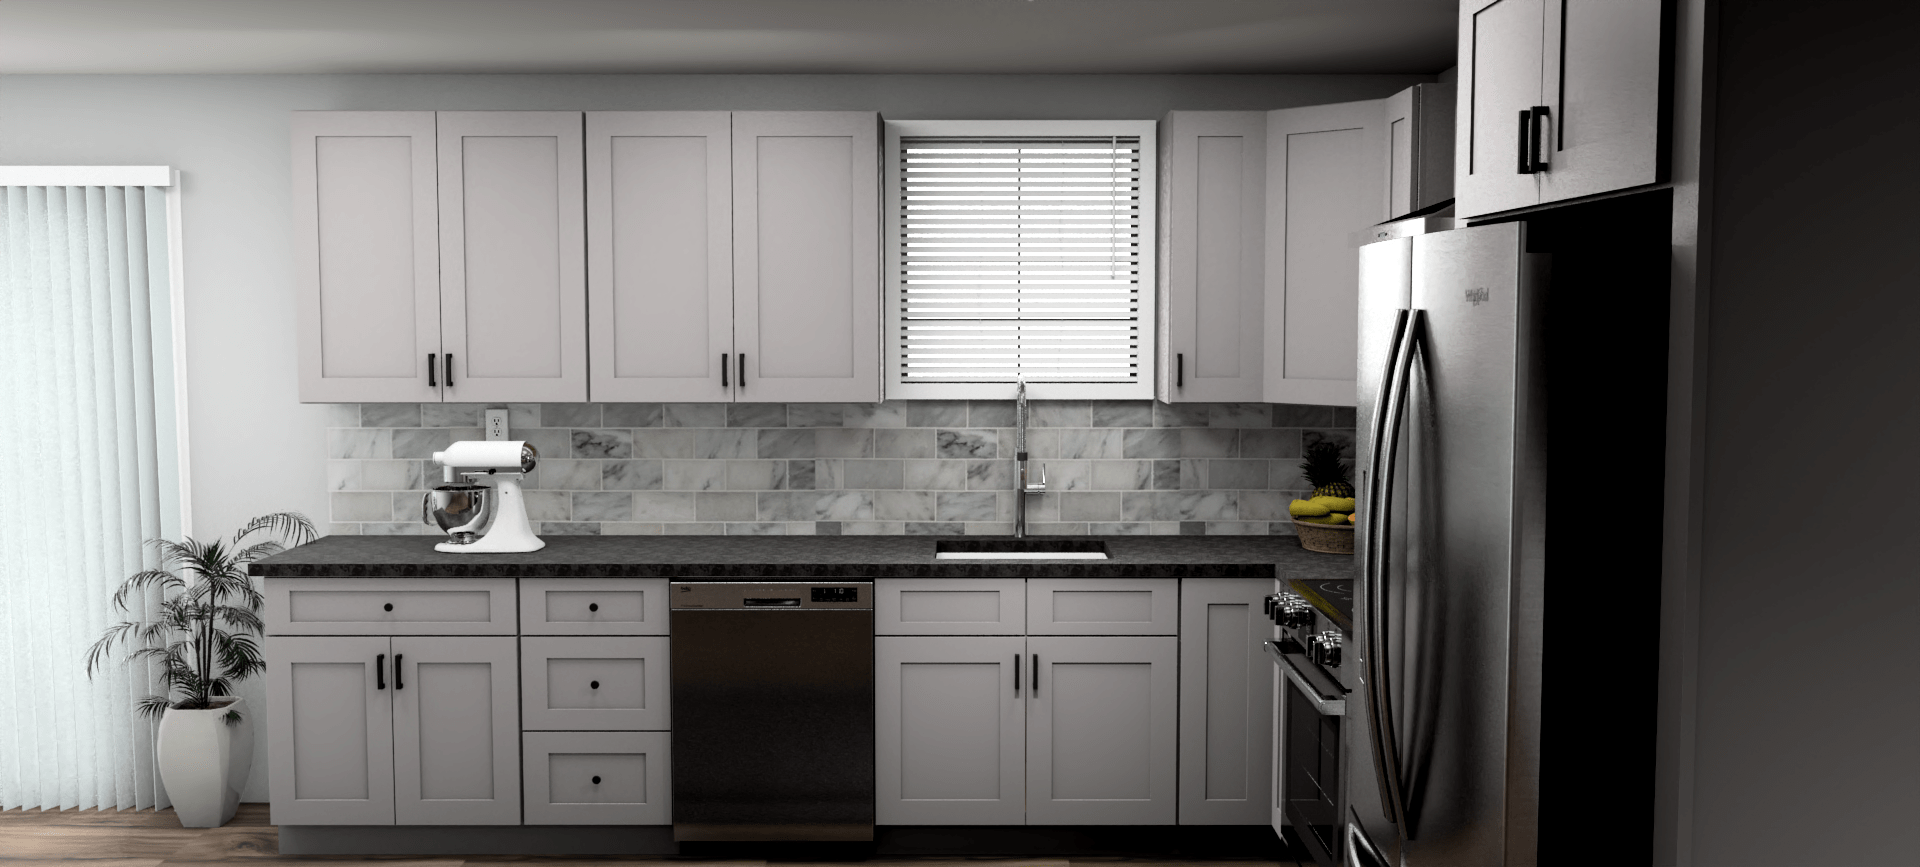 Fabuwood Allure Galaxy Nickel 12 x 11 L Shaped Kitchen Side Layout Photo